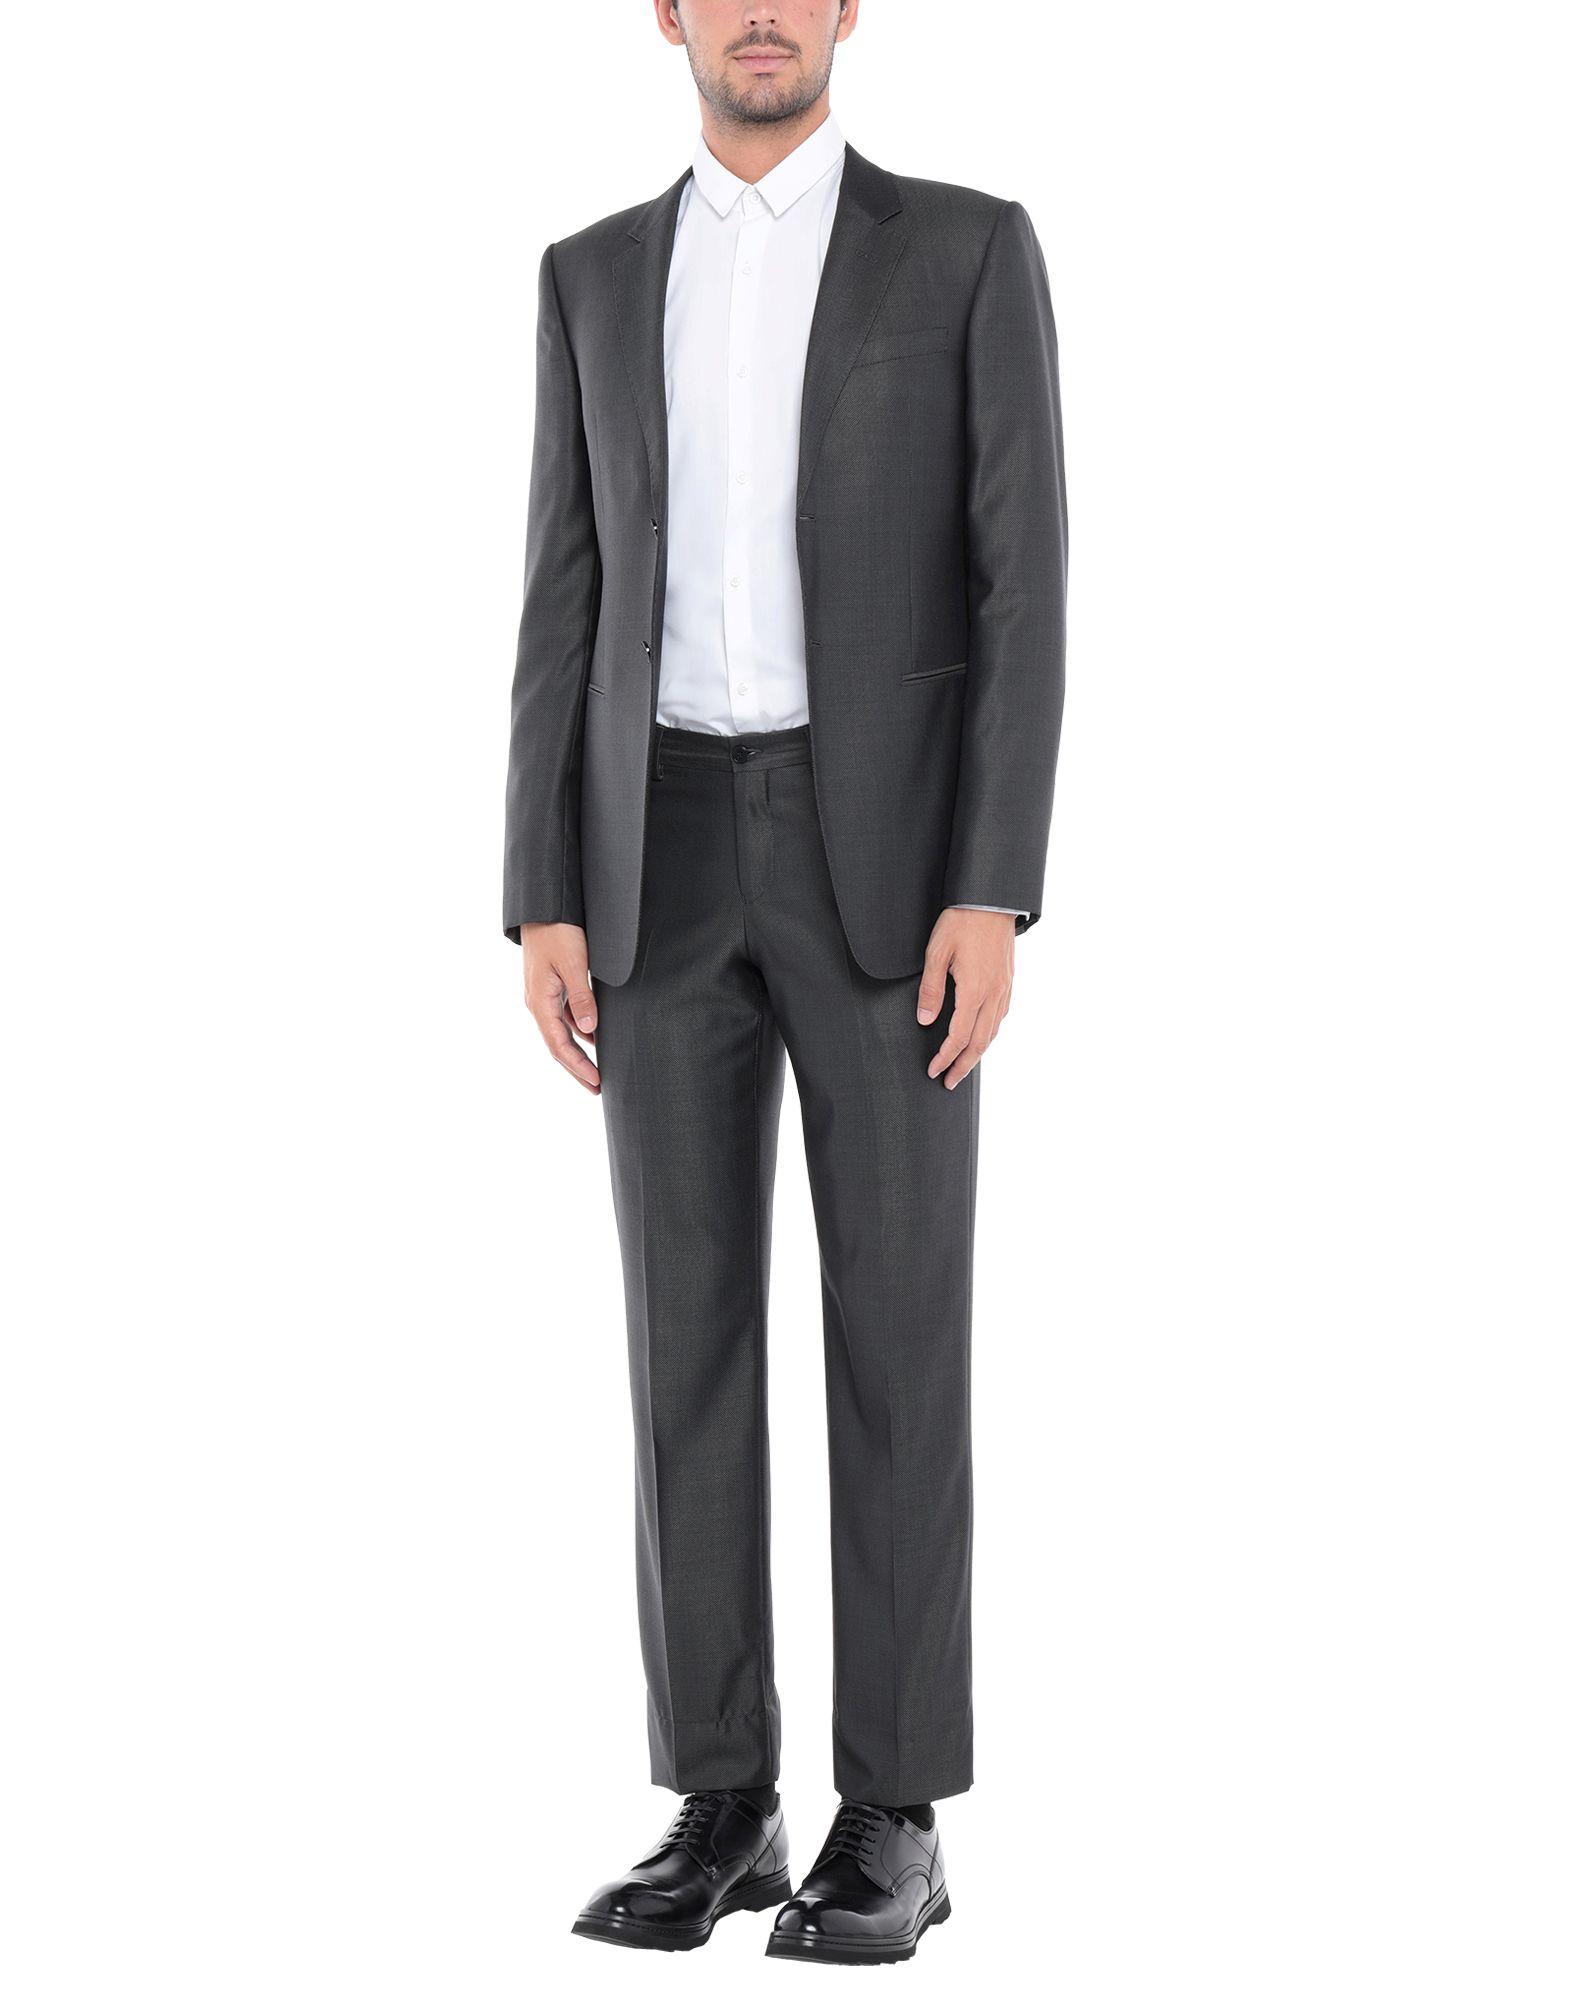 Emporio Armani Wool Suit in Steel Grey (Gray) for Men - Lyst